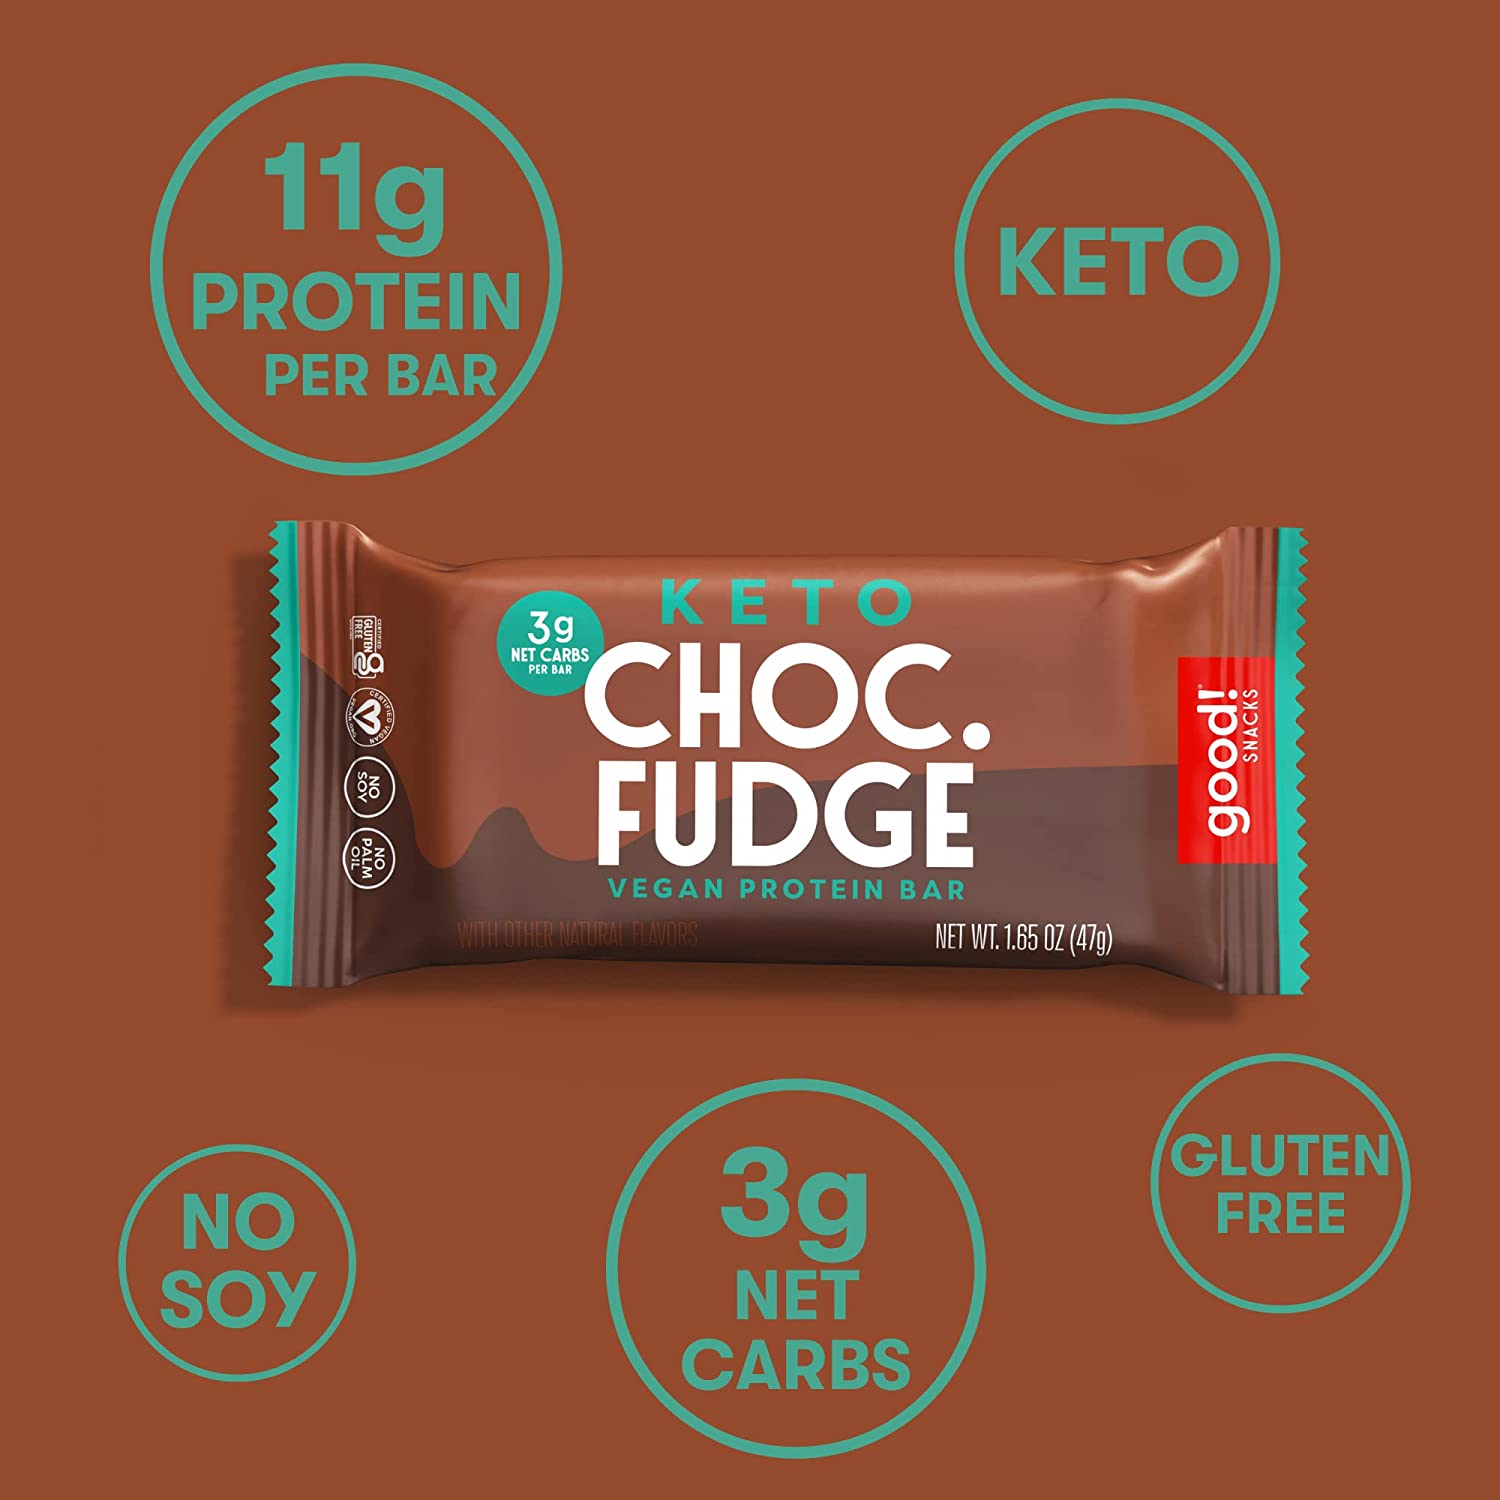 EWG's Food Scores  Zone Perfect Chocolate Keto Shakes, Chocolate